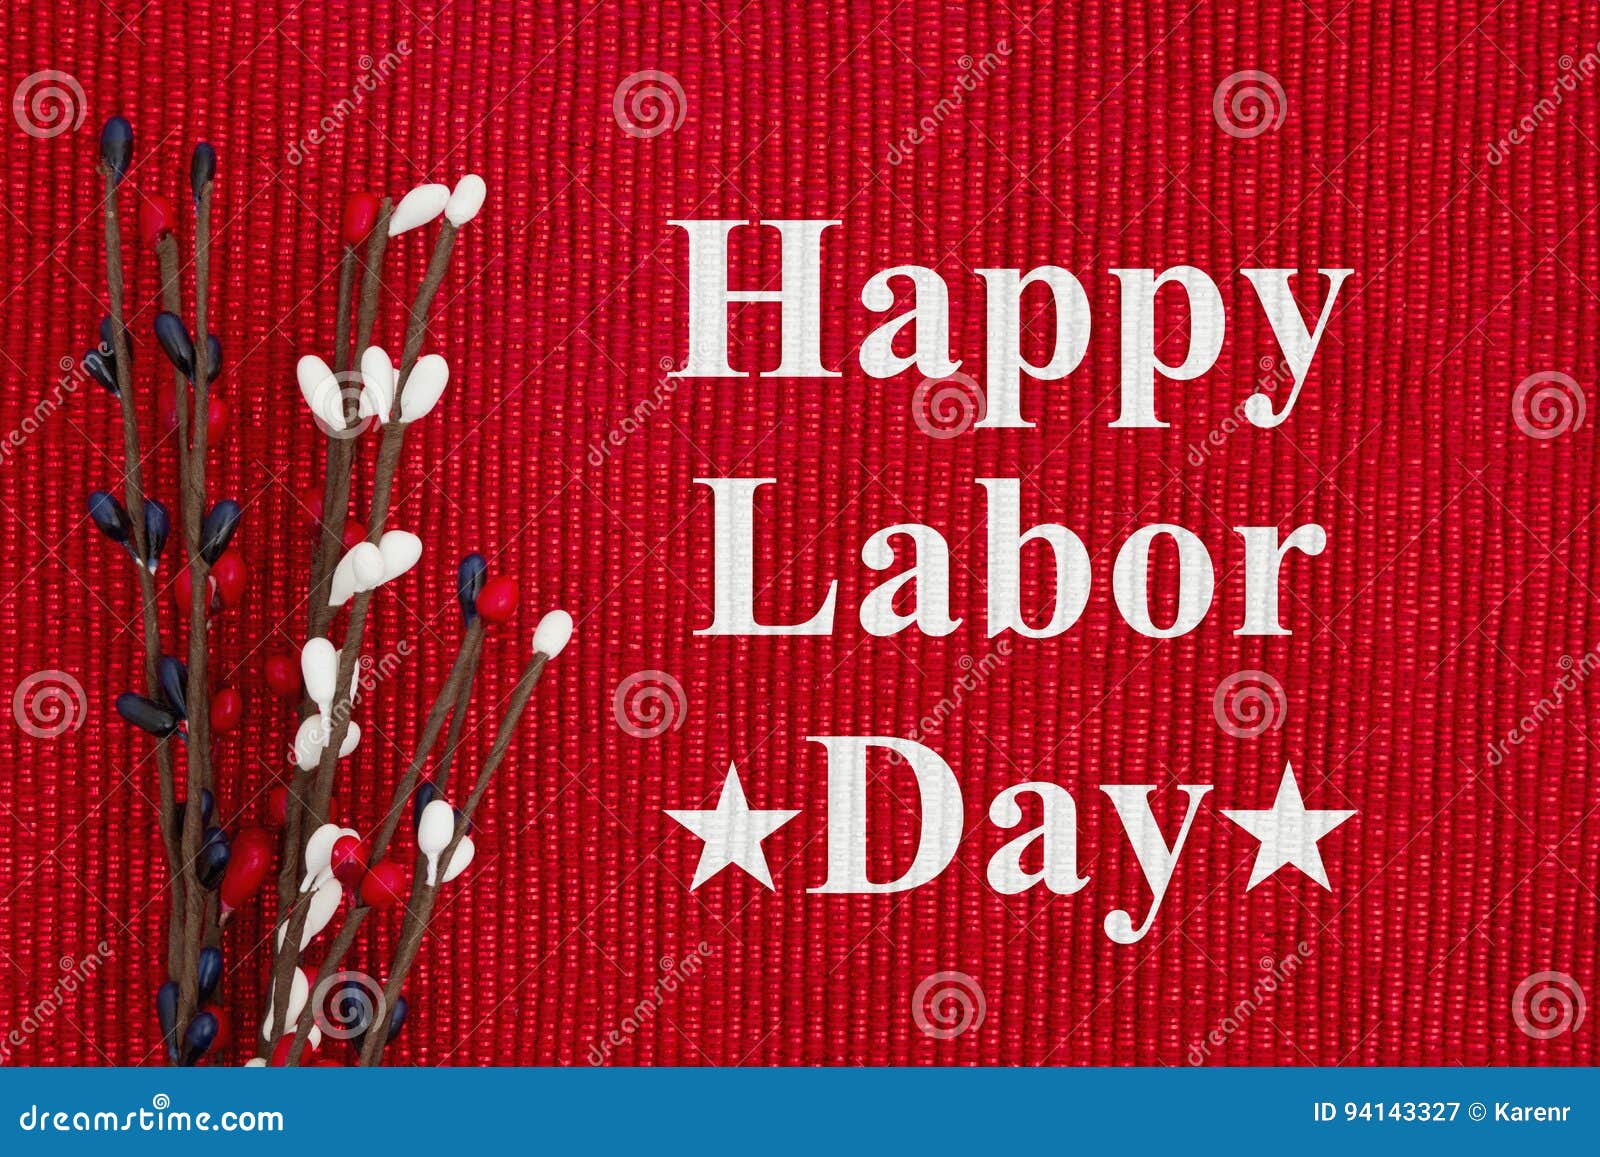 happy labor day greeting